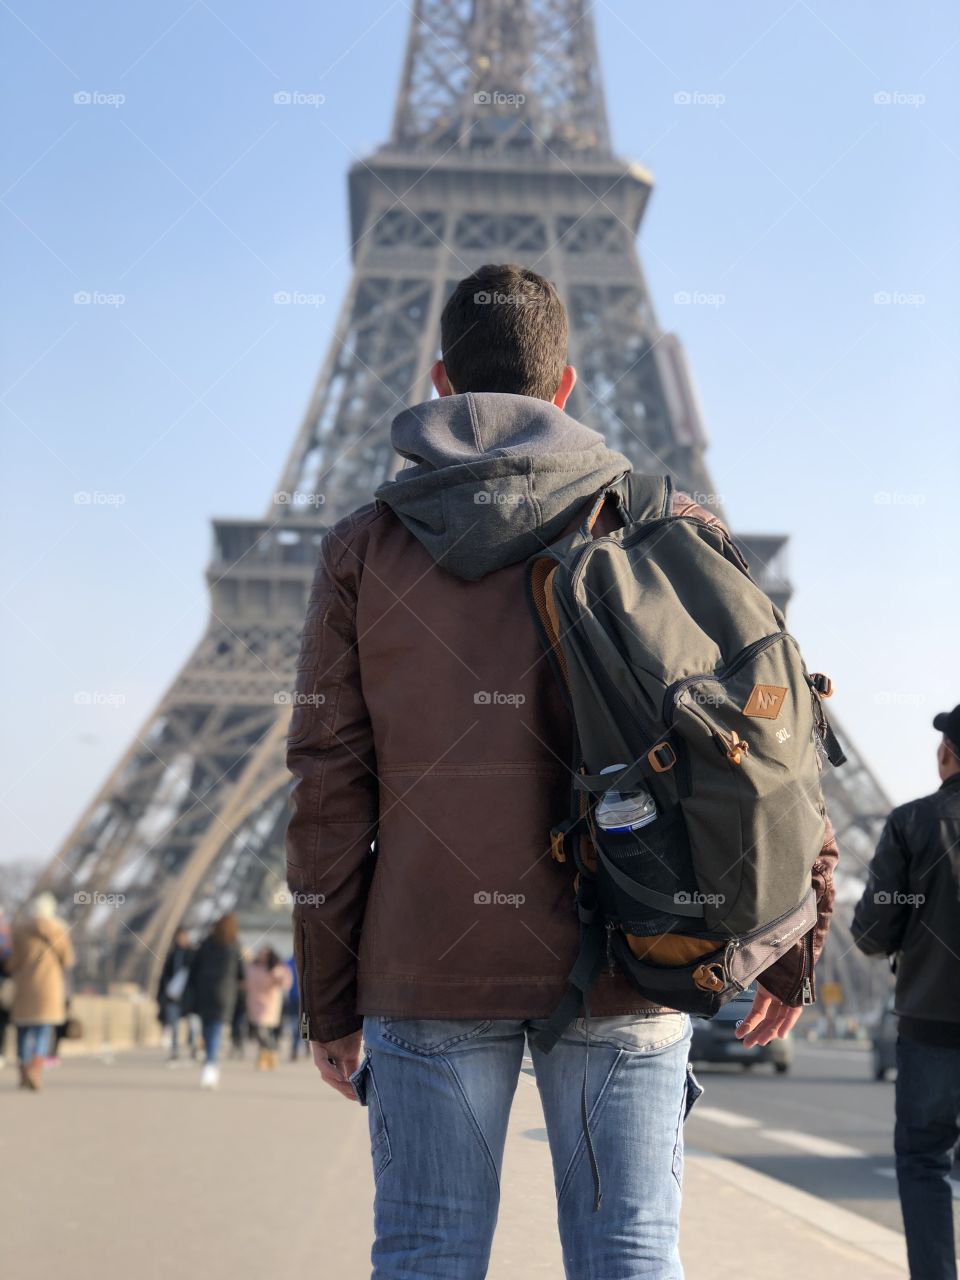 My boyfriend facing the Eiffel Tower in Paris France. 